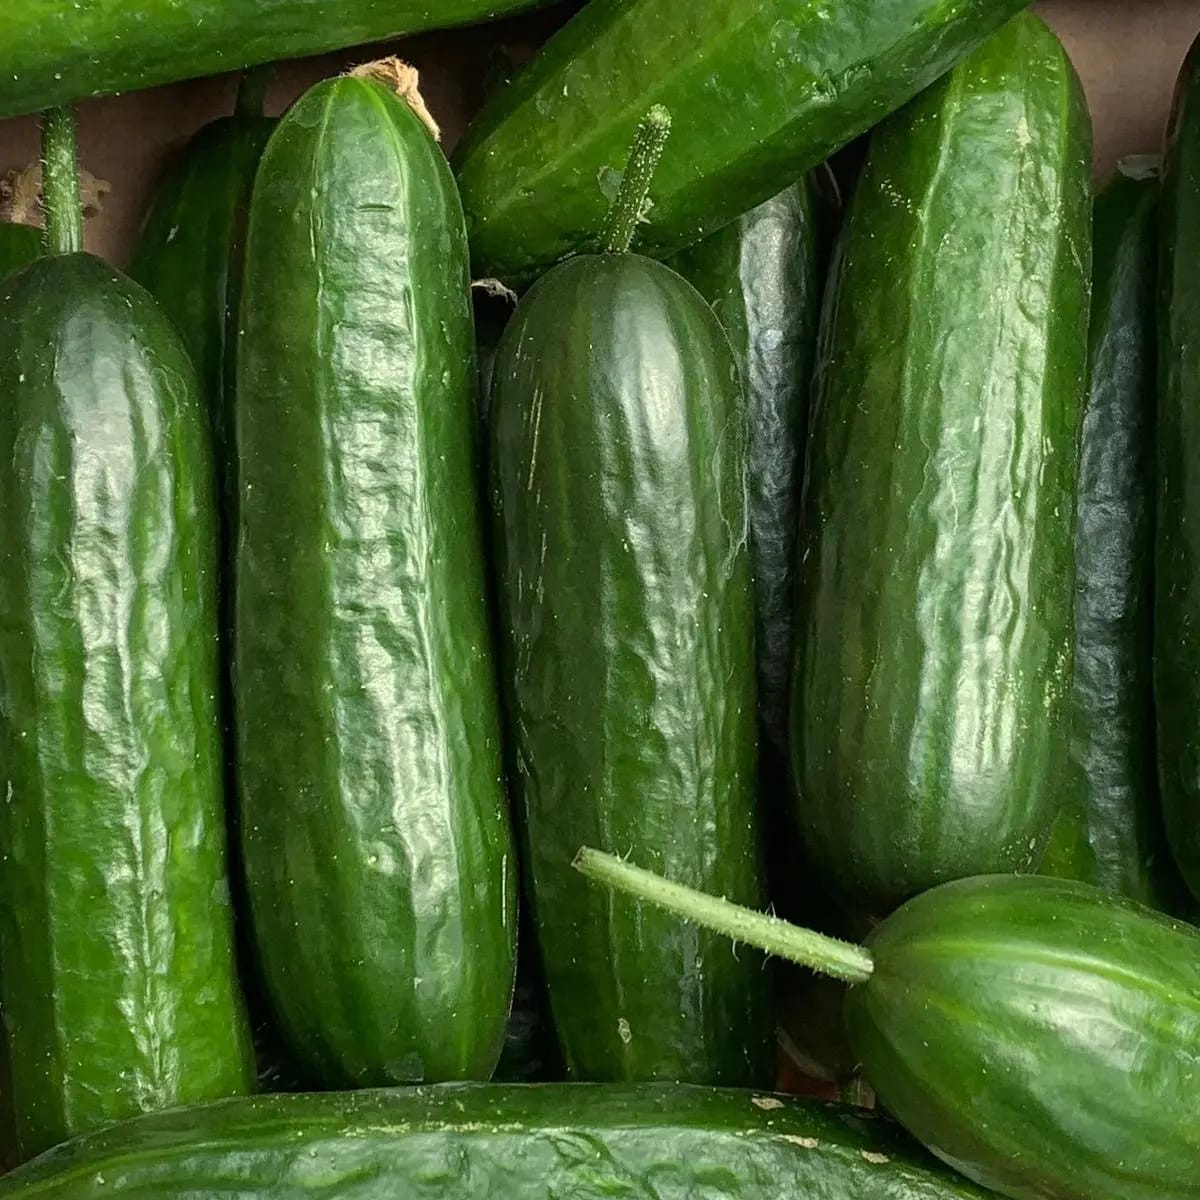 Short cucumbers from Haslum